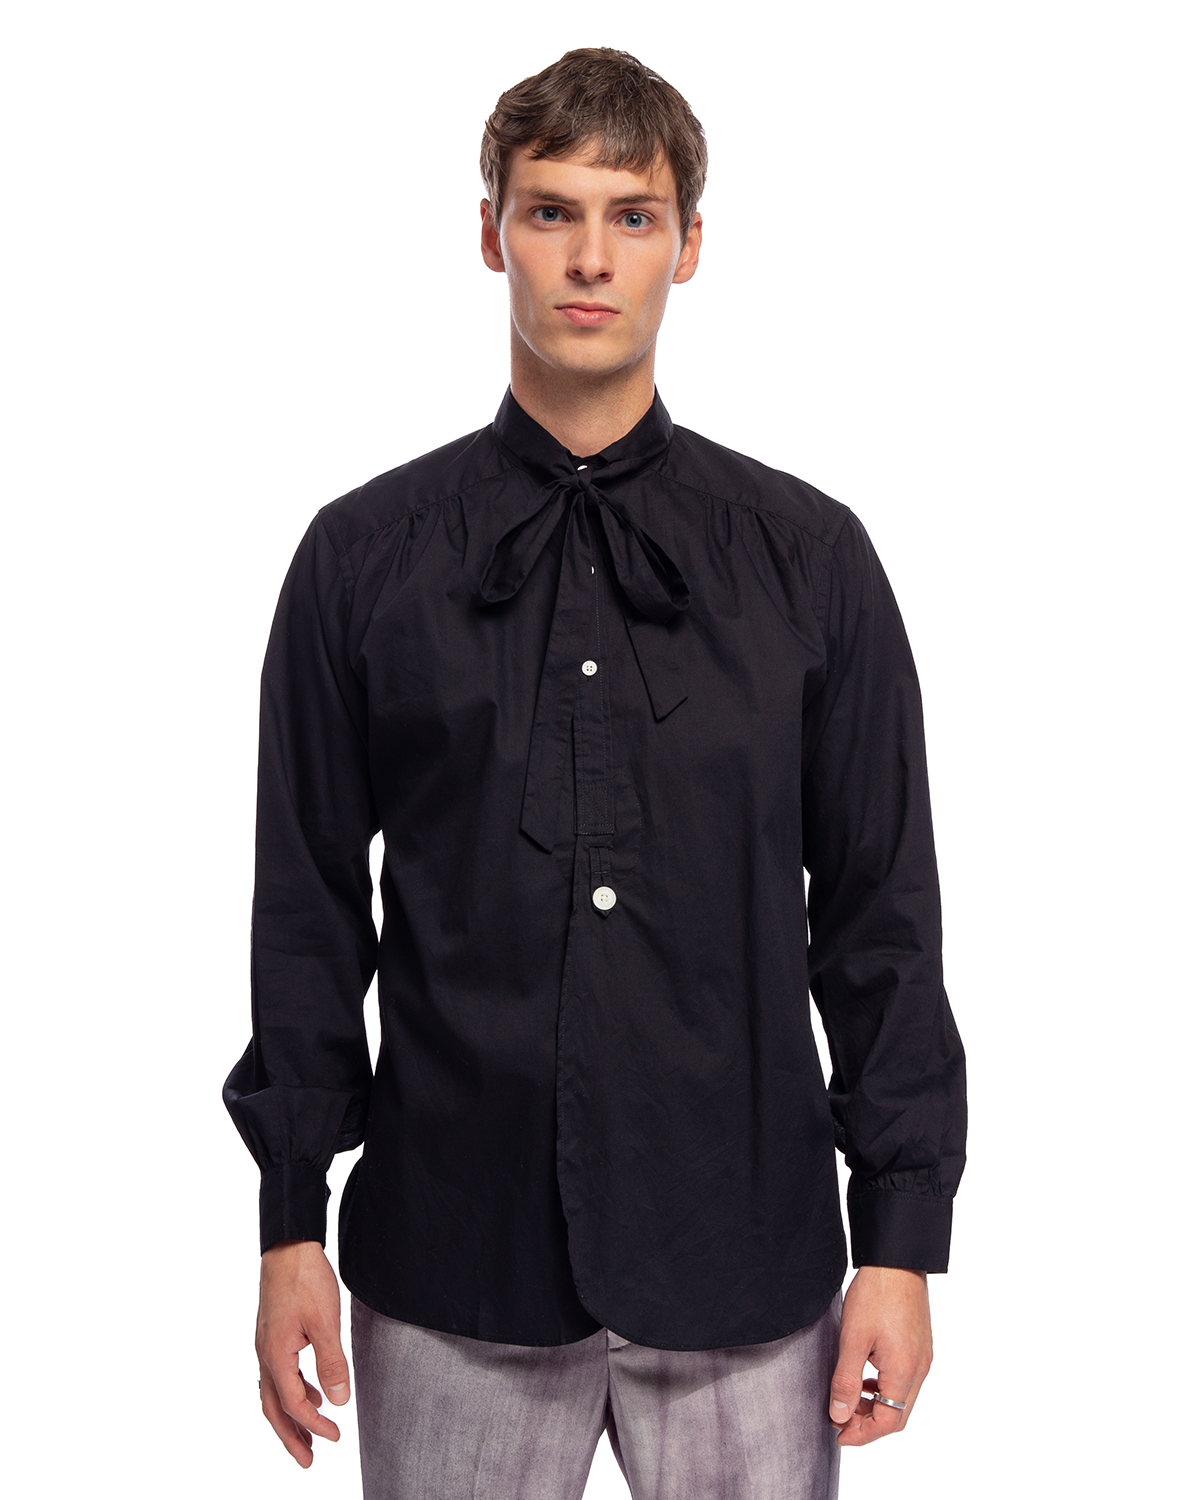 Ascot Collar Shirt Cotton Broadcloth